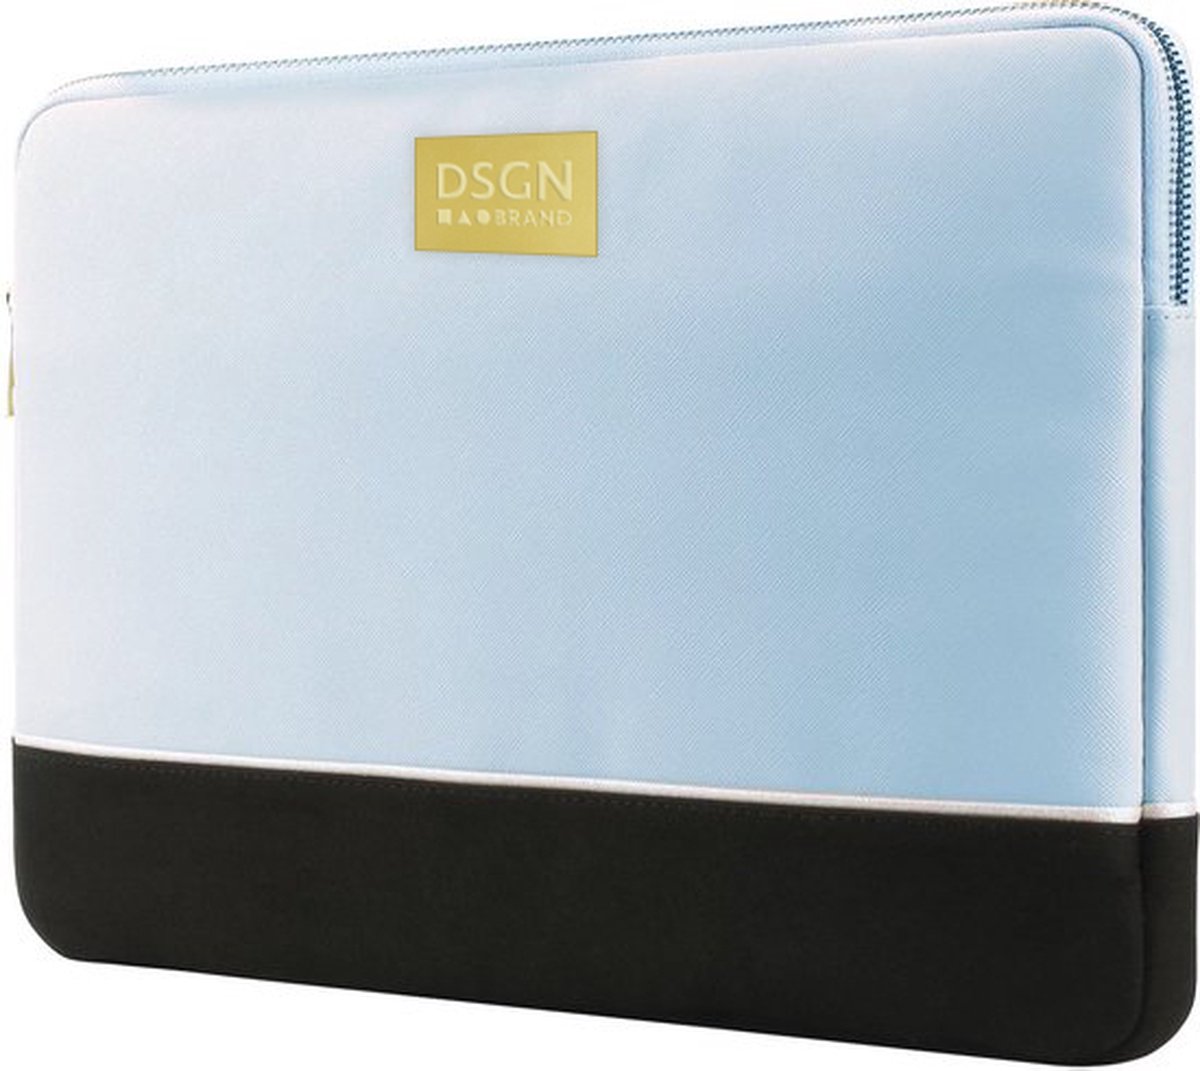 DSGN LXRY - Laptophoes 13 inch - Apple MacBook Air Pro 13.3-14 inch - Laptop Sleeve Hoes Case - Waterdicht - Goud Metaal Logo - Blauw - Zwart